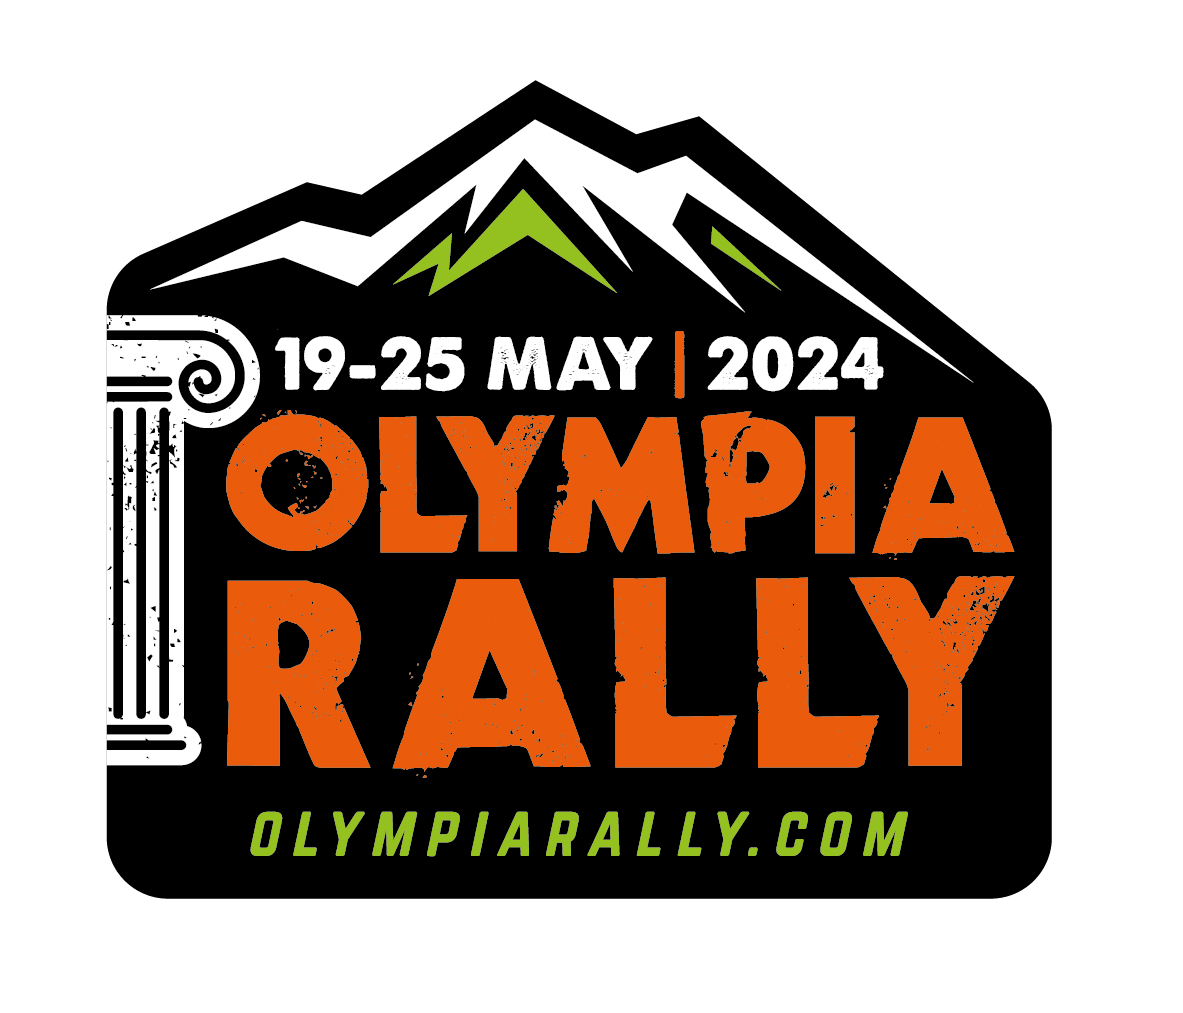 square Olympia logo 19 25 May 2024 black orange Olympia rally